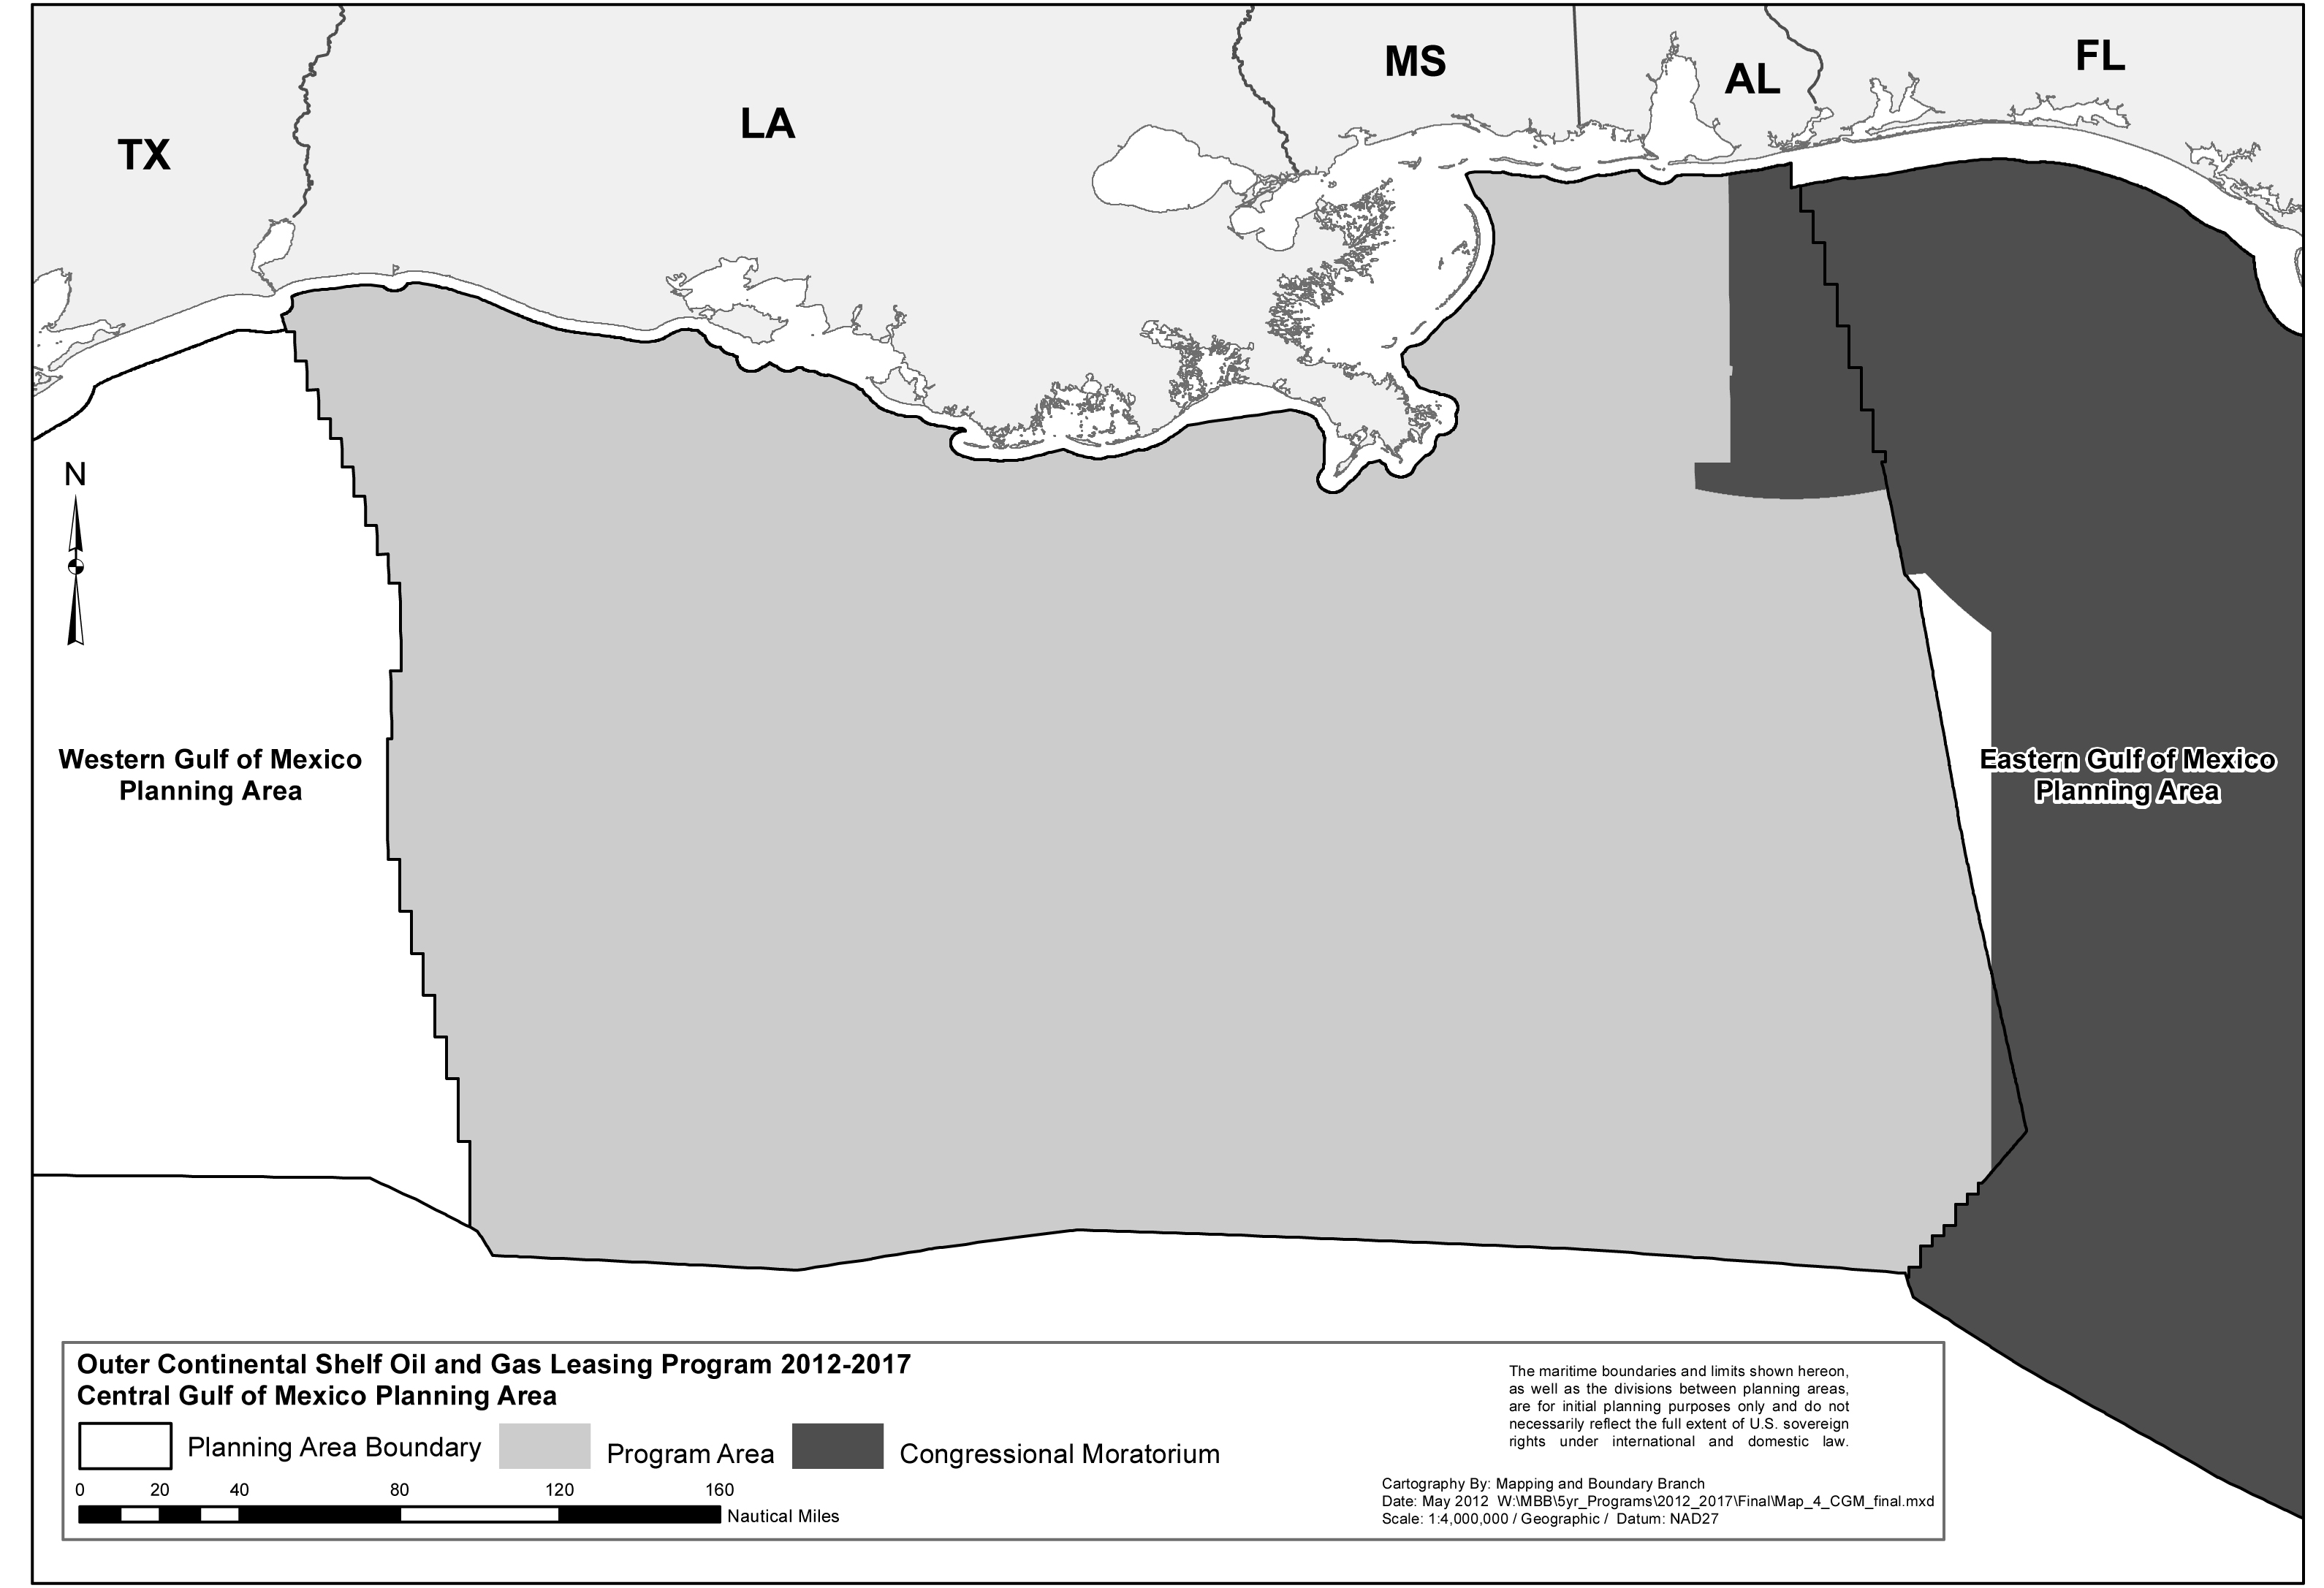  1Central Gulf of Mexico Program Area